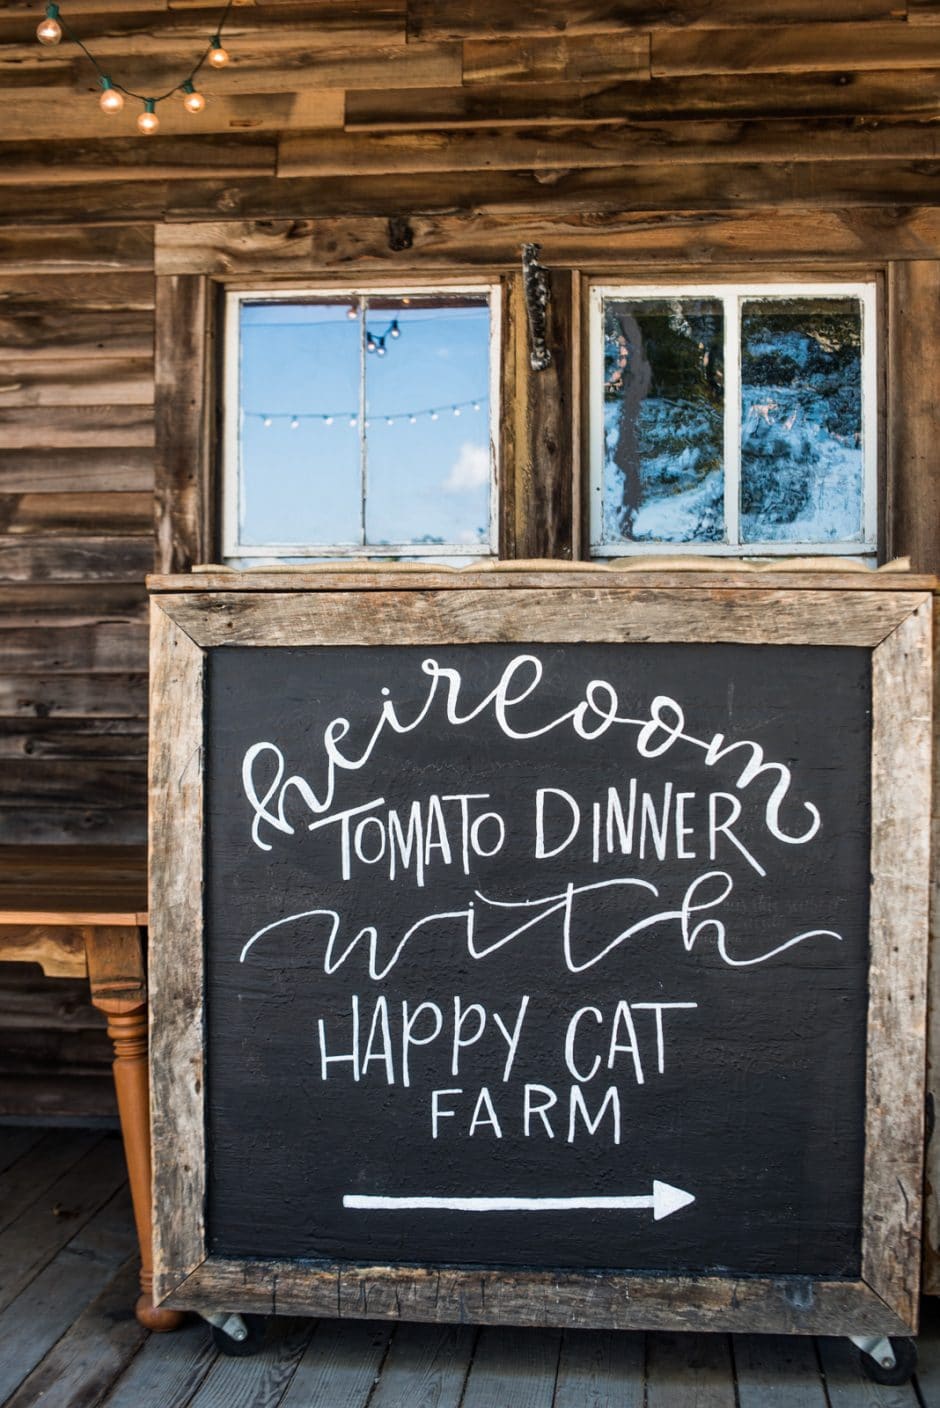 Happy Cat Farm heirloom tomato dinner